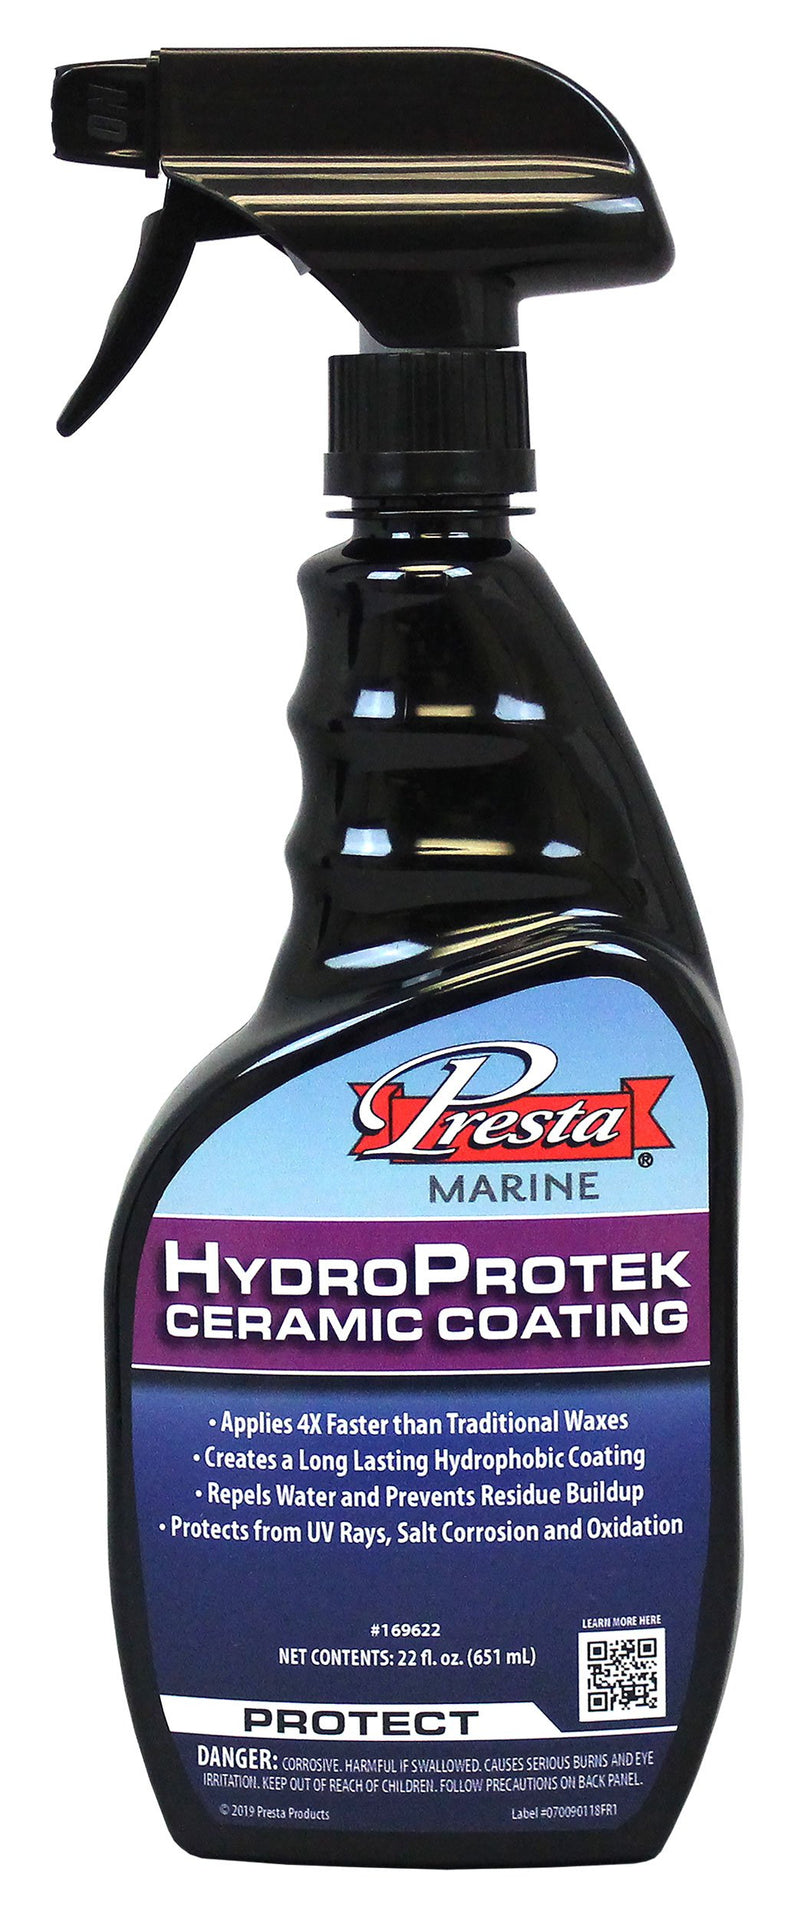 22 oz Spray bottle HydroProtek Ceramic Coating from Presta Marine